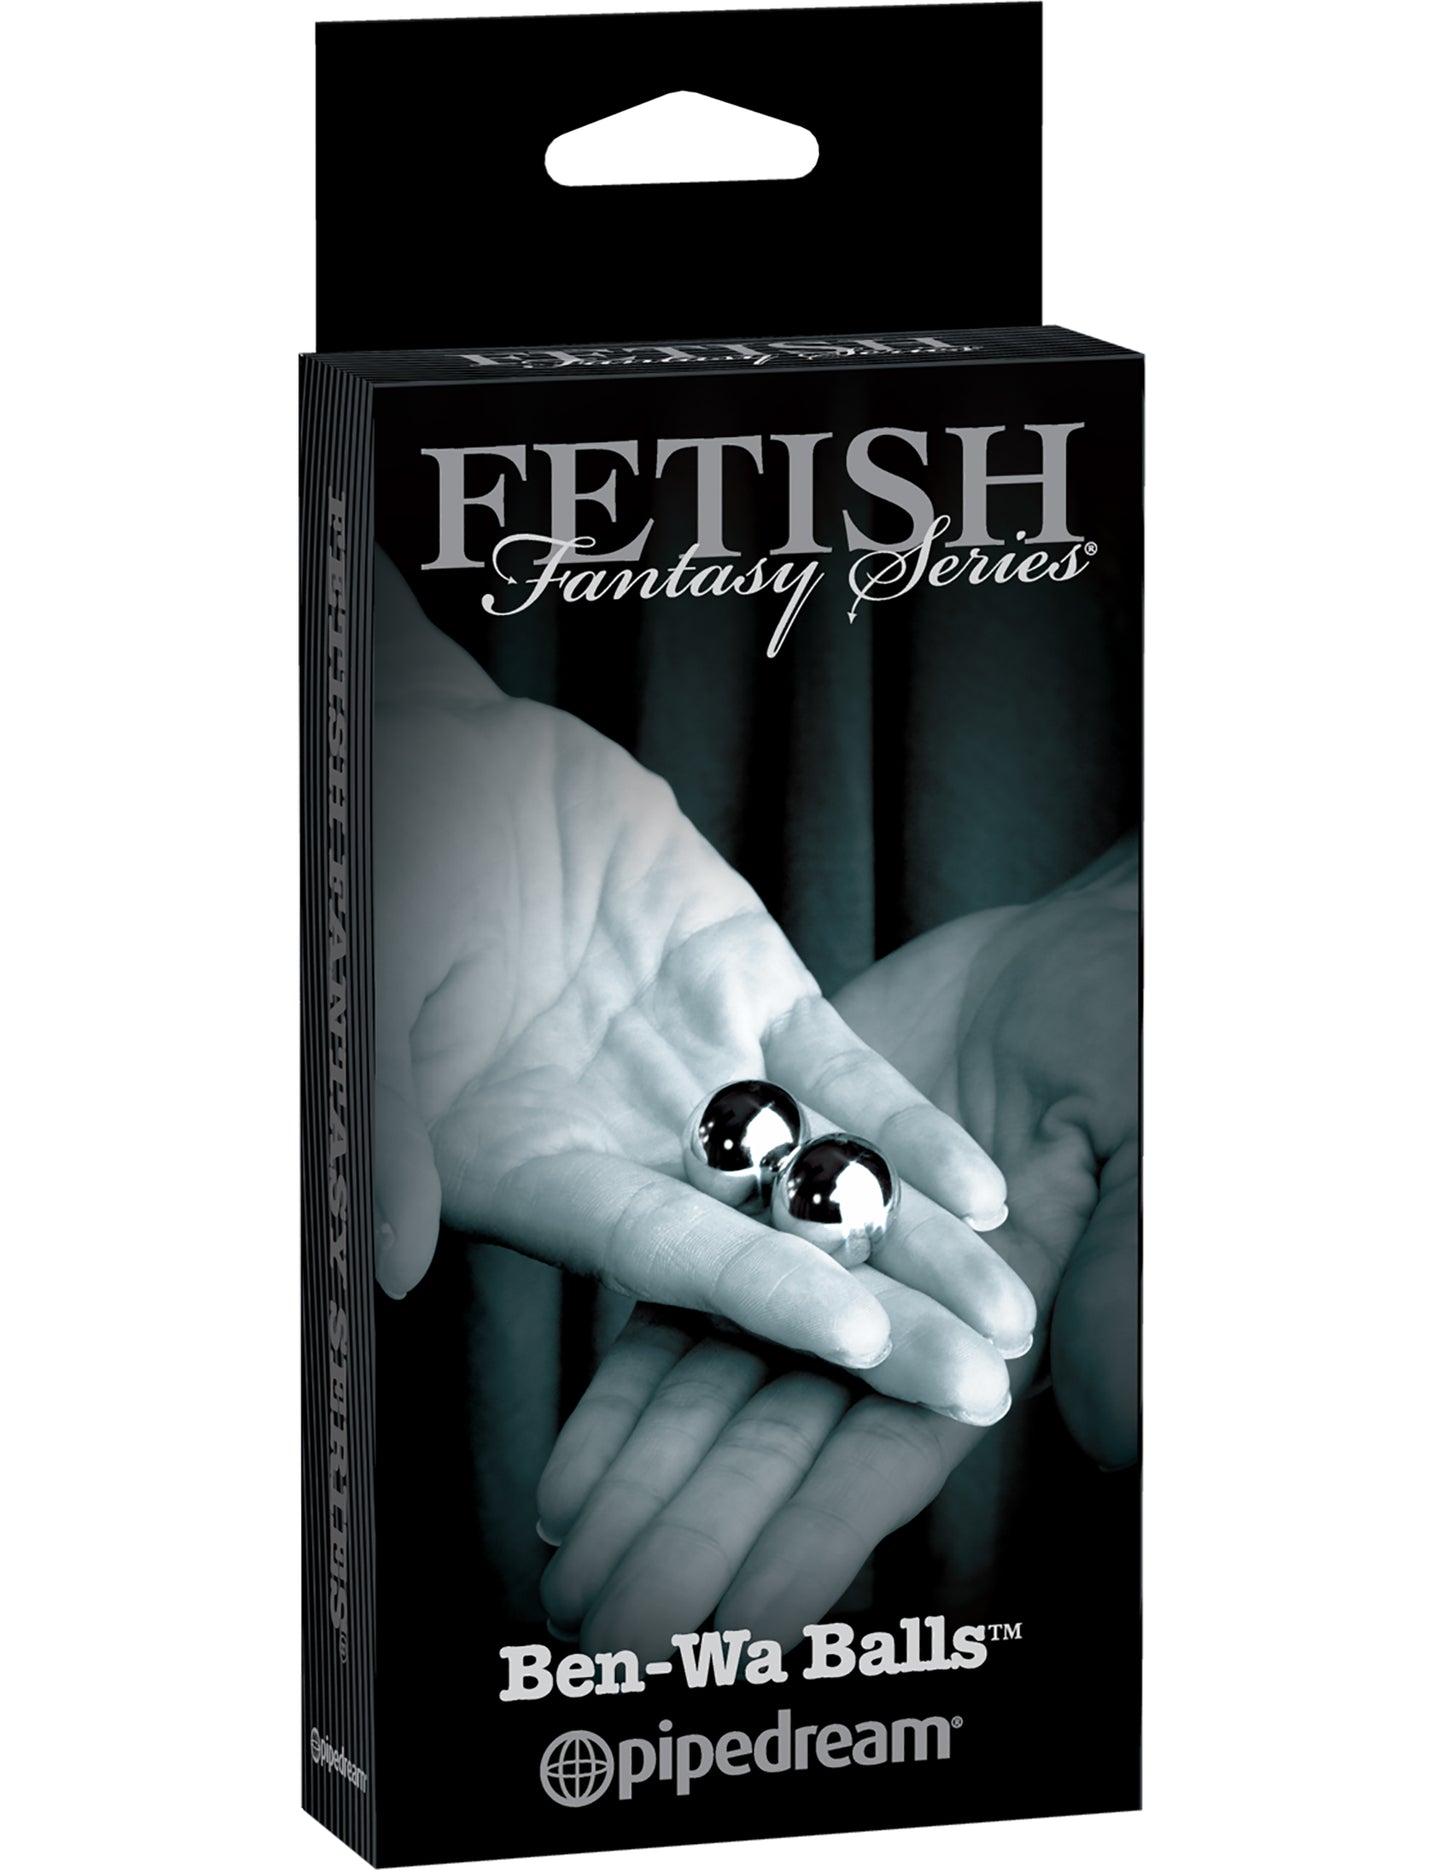 Fetish Fantasy Series Ltd. Ed. - Ben-Wa Balls PD4425-00